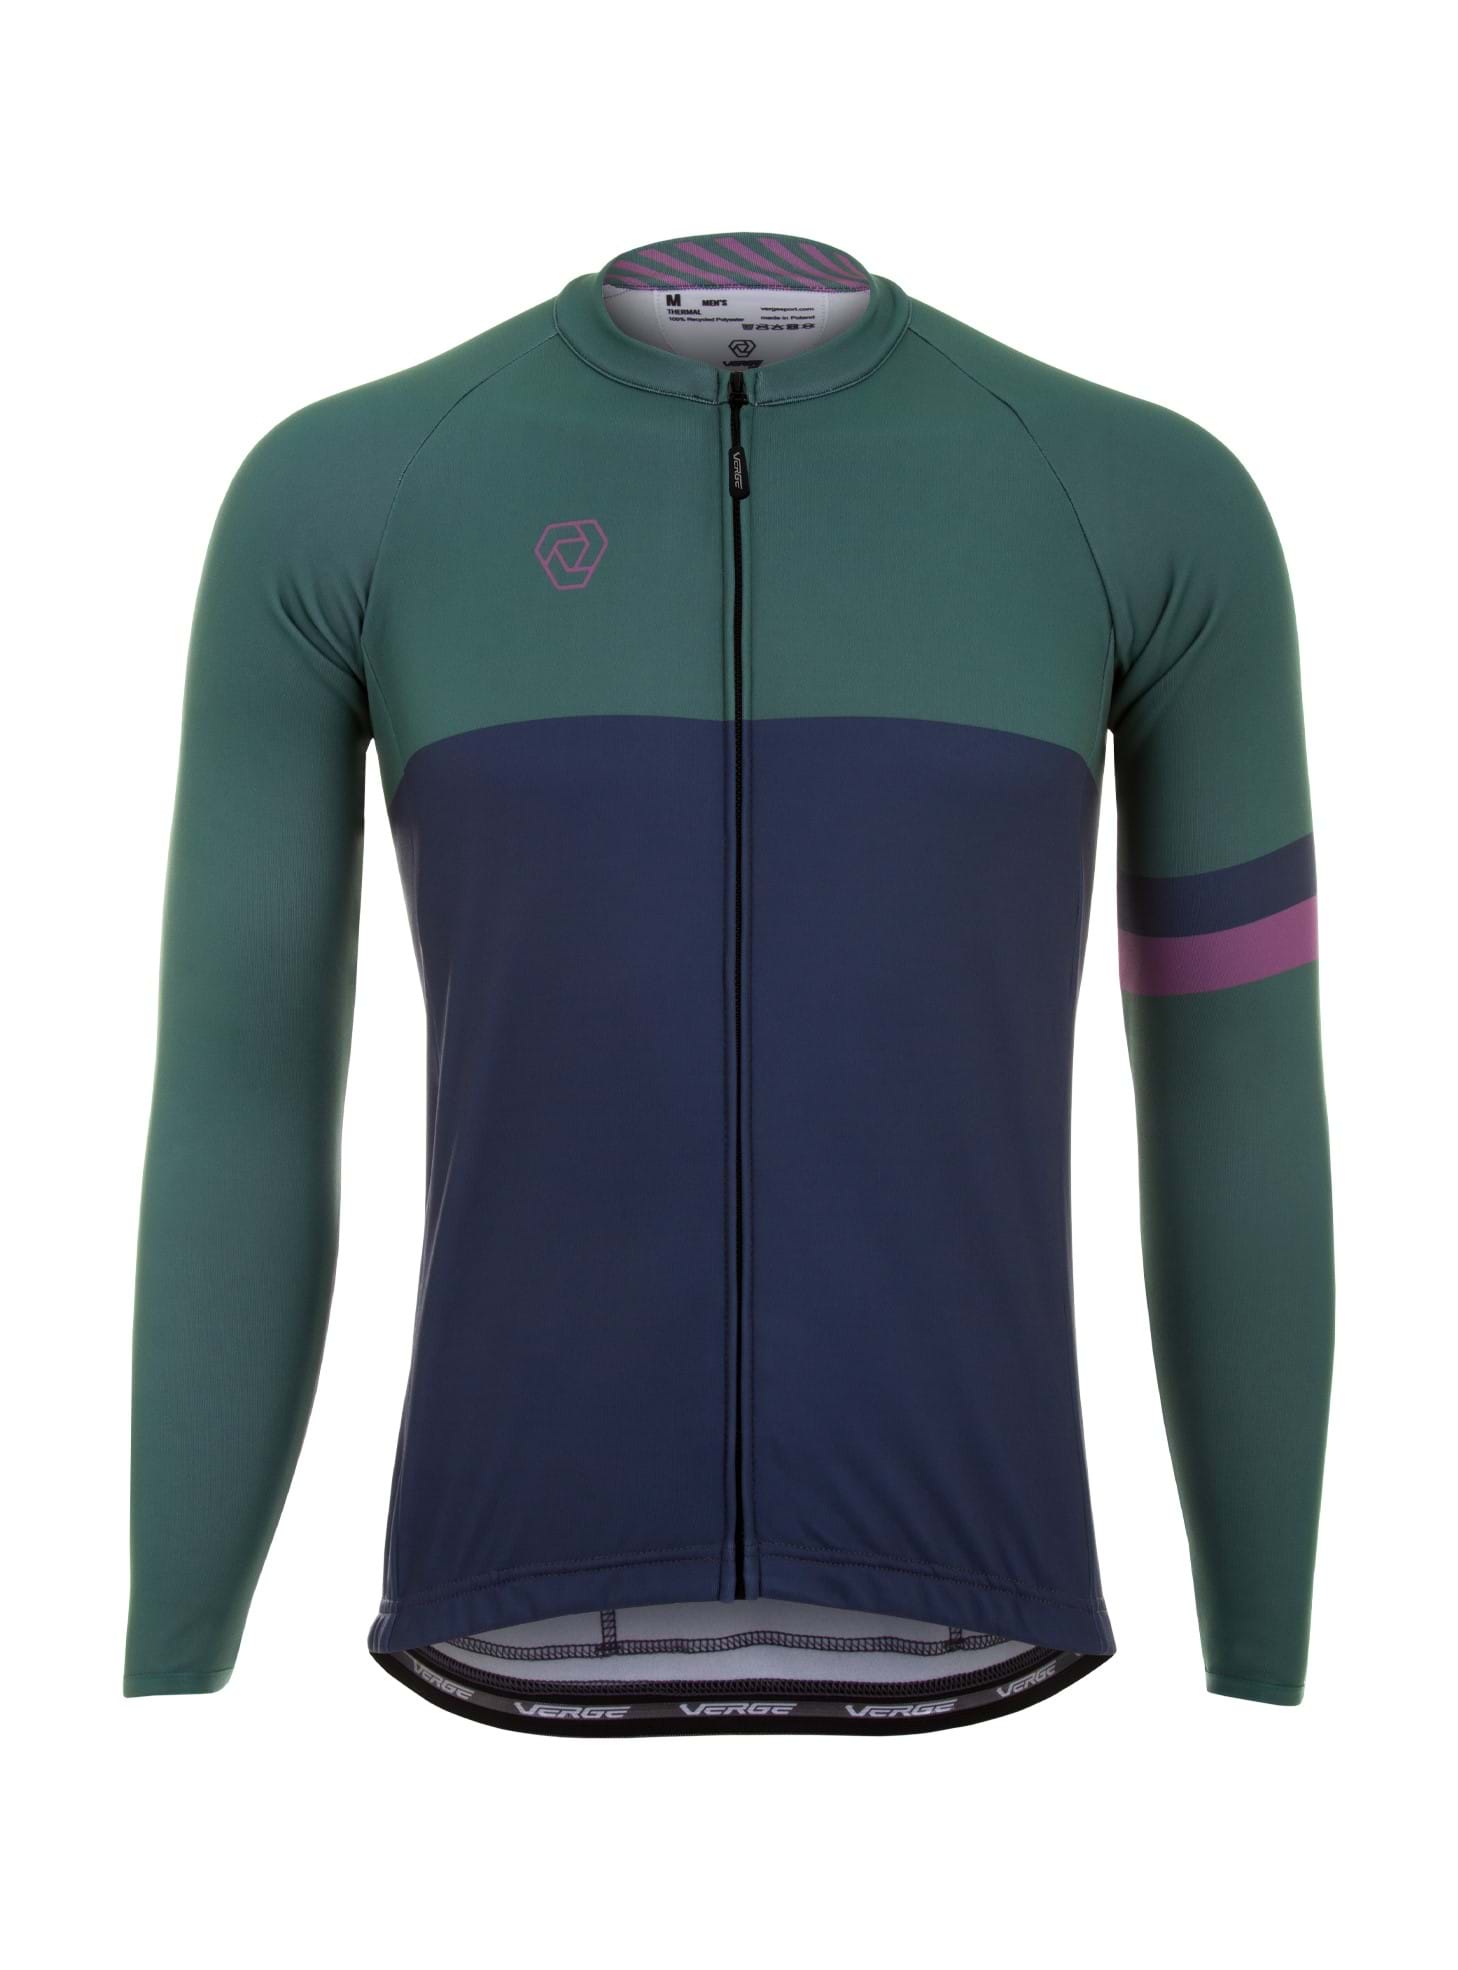 Verge Sport Thermal Men's Cycling Jersey Long Sleeve Team Wear